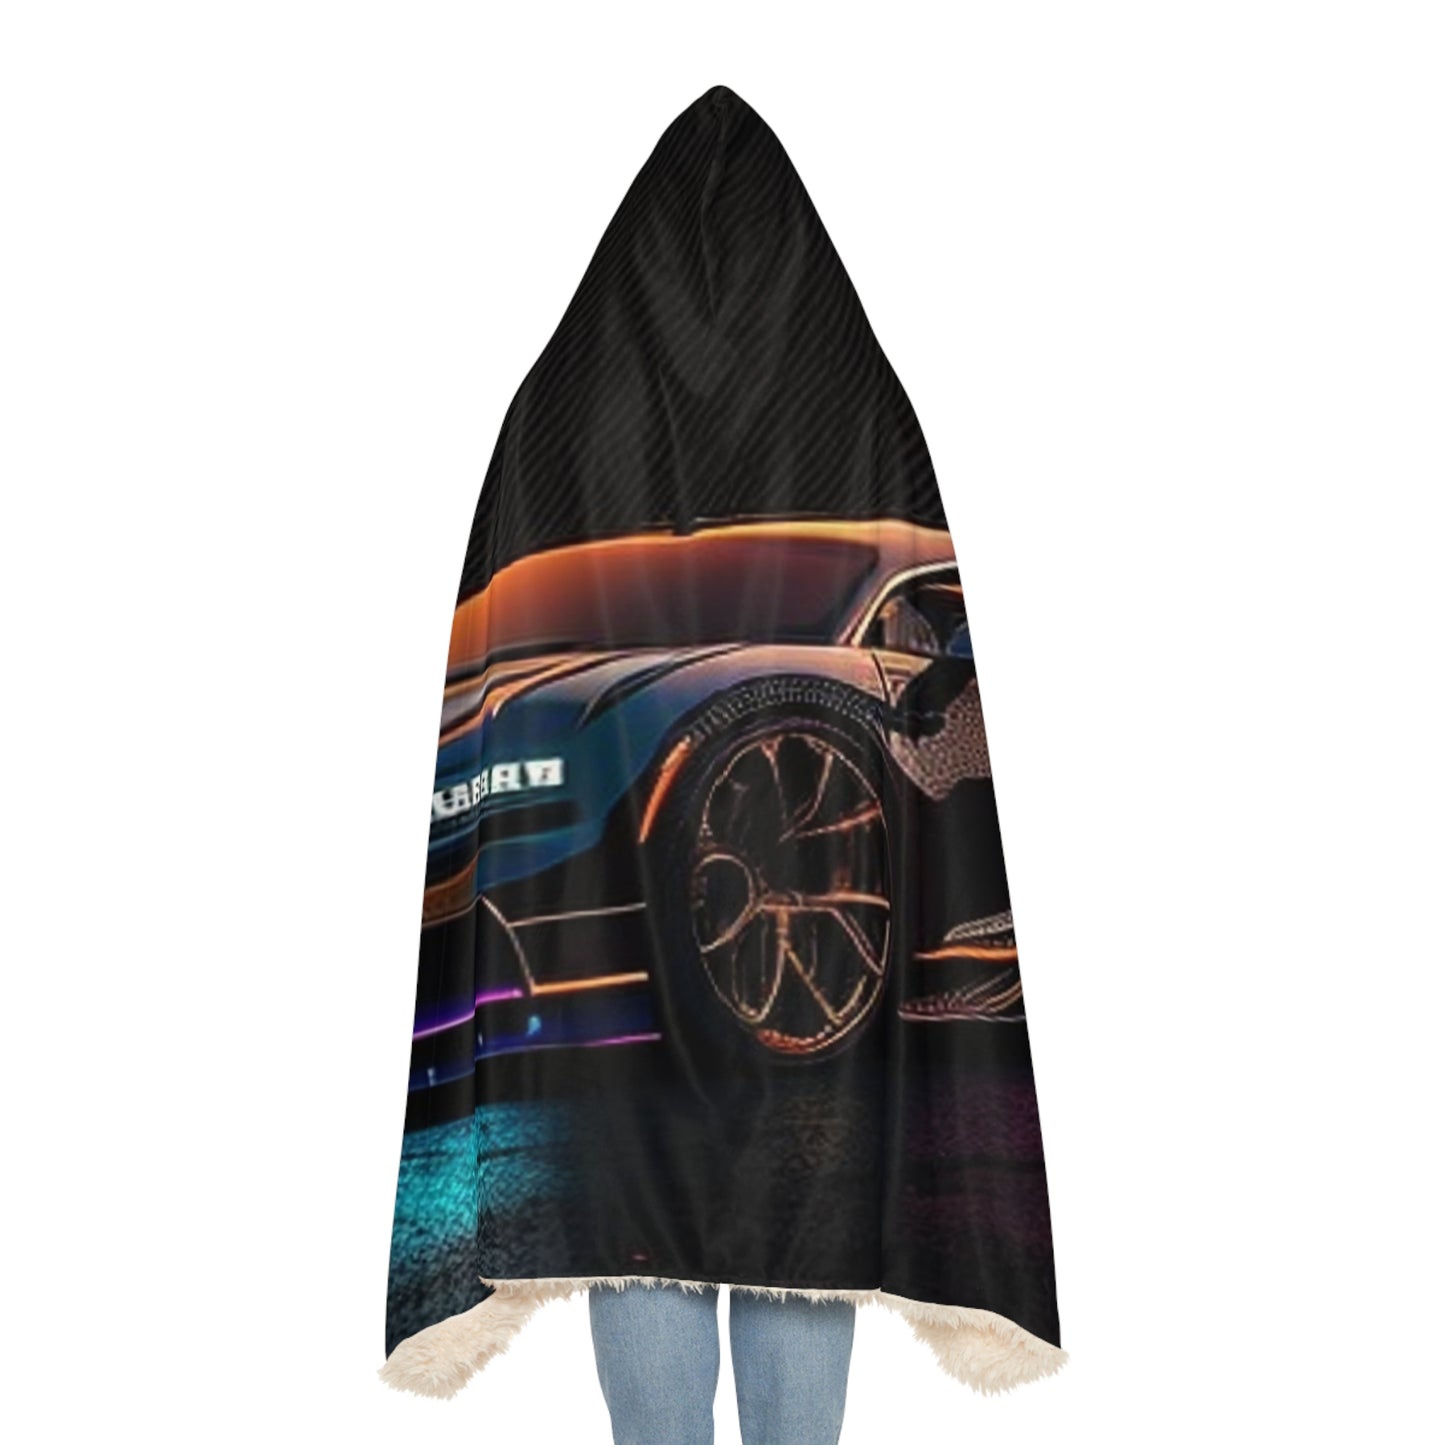 Snuggle Hooded Blanket Bugatti Chiron Super 4